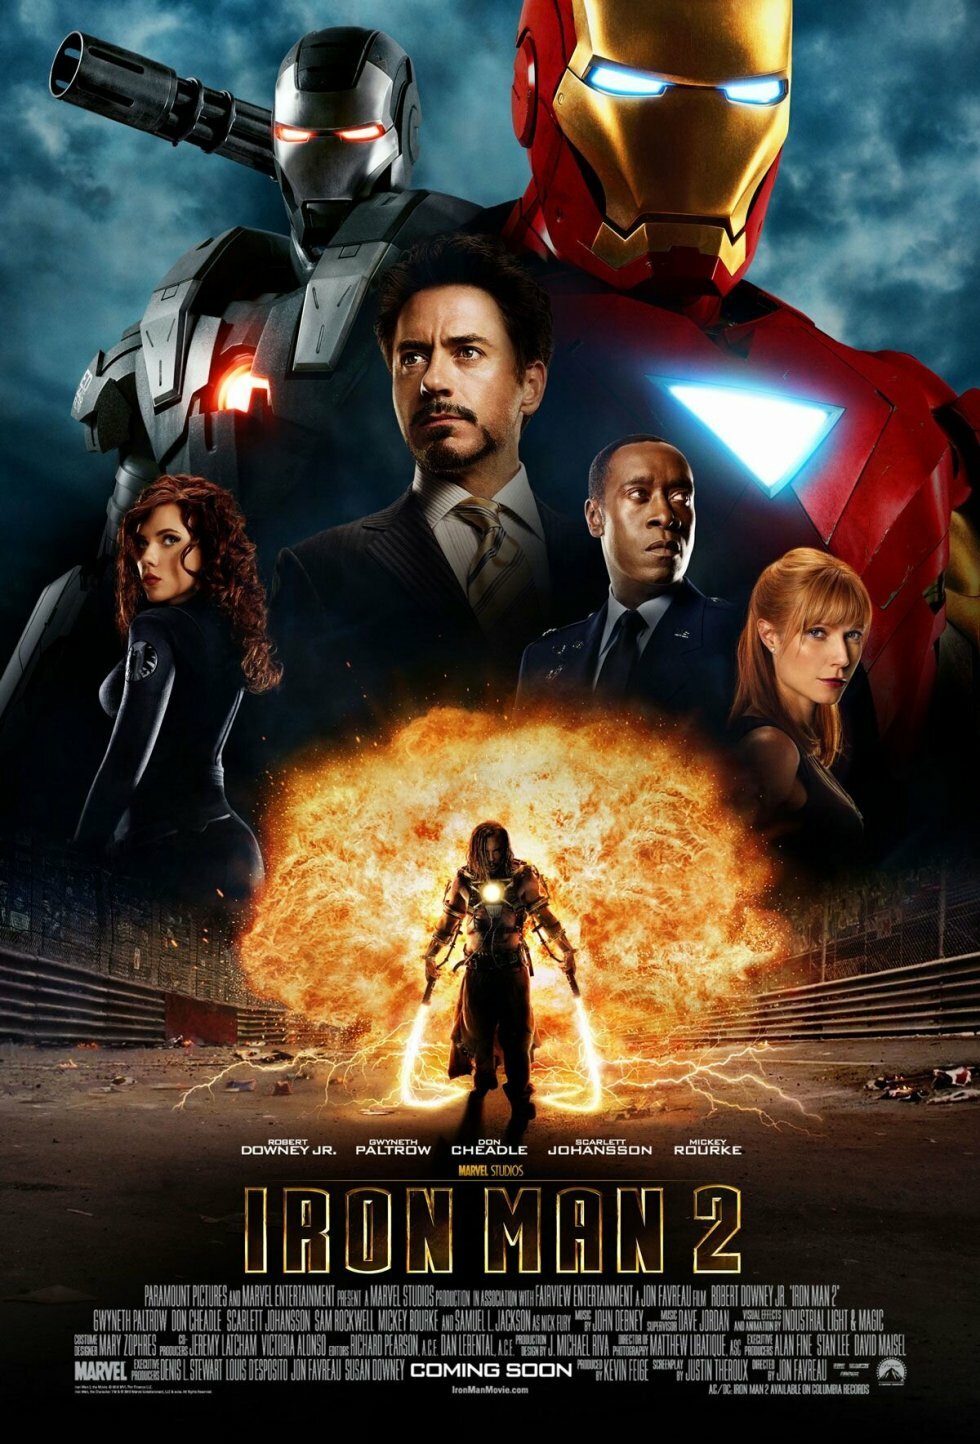 Iron Man 2 - Marvel Studios - 71 timers film-maraton: I denne rækkefølge skal du se Marvel filmene